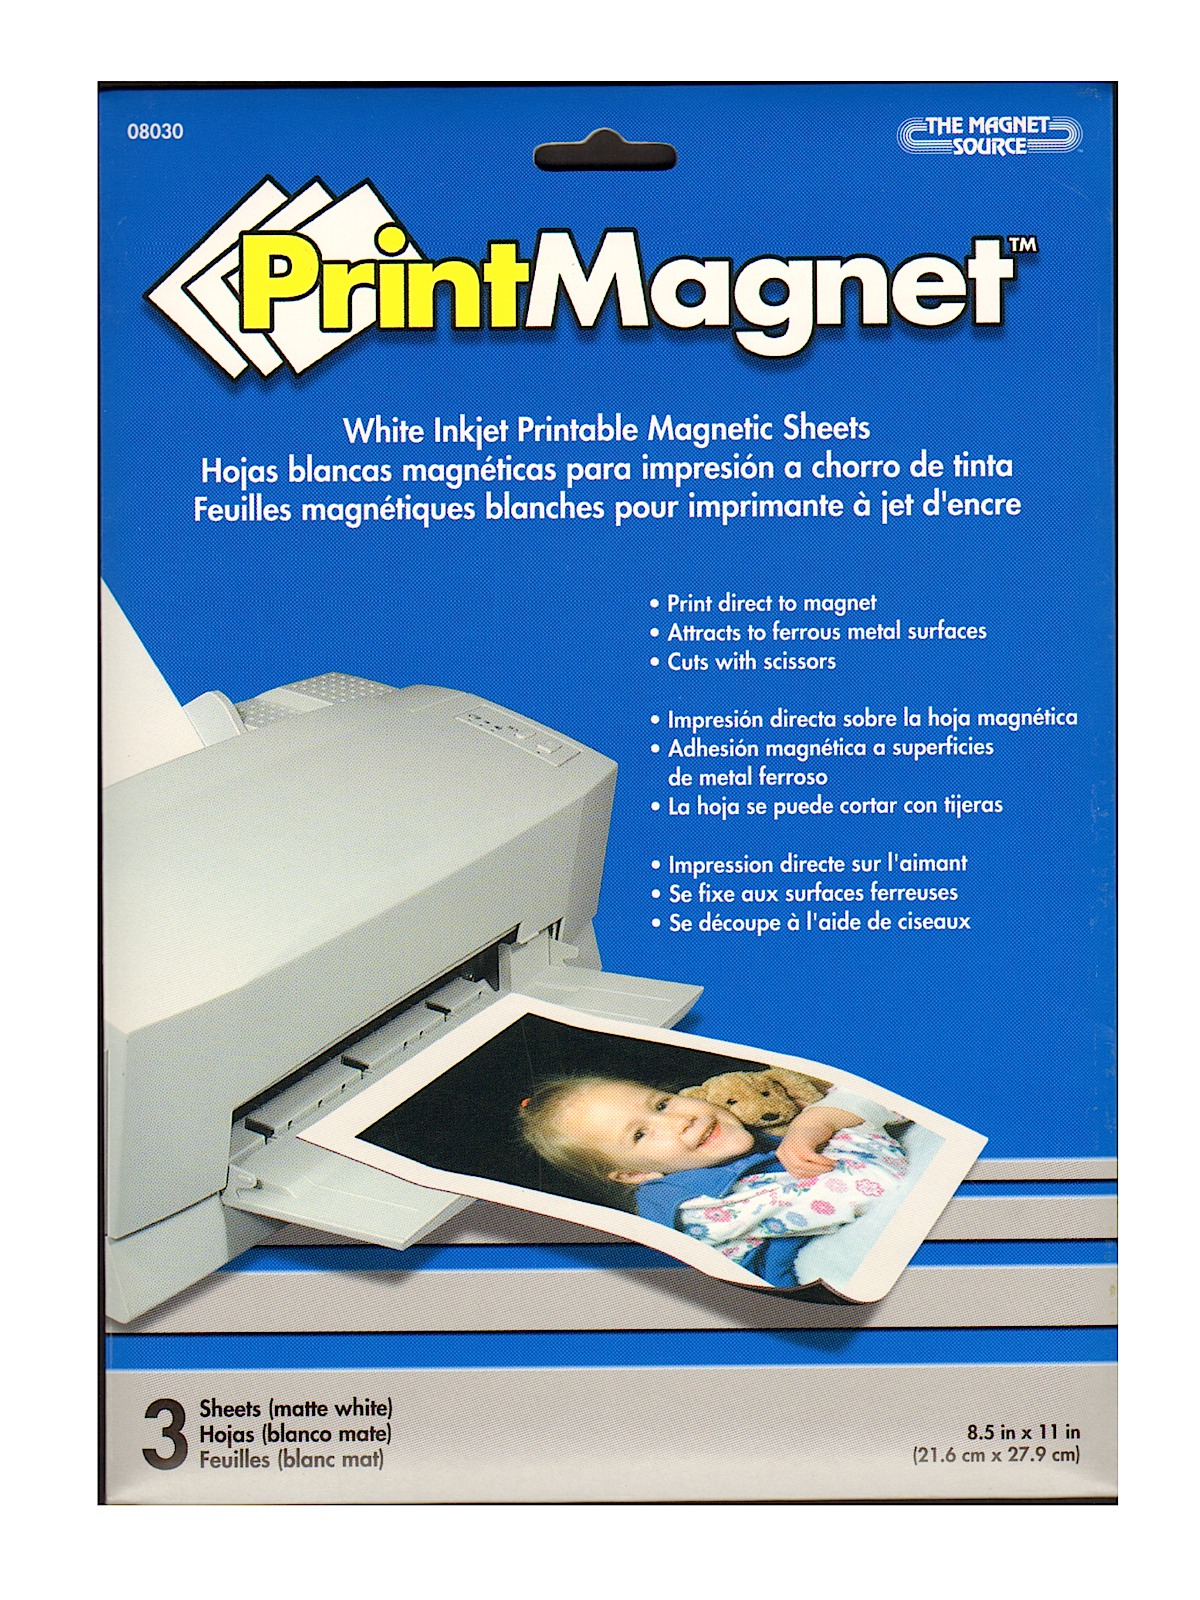 Printmagnet Inkjet Printable Magnetic Sheets 8.5 In. X 11 In.